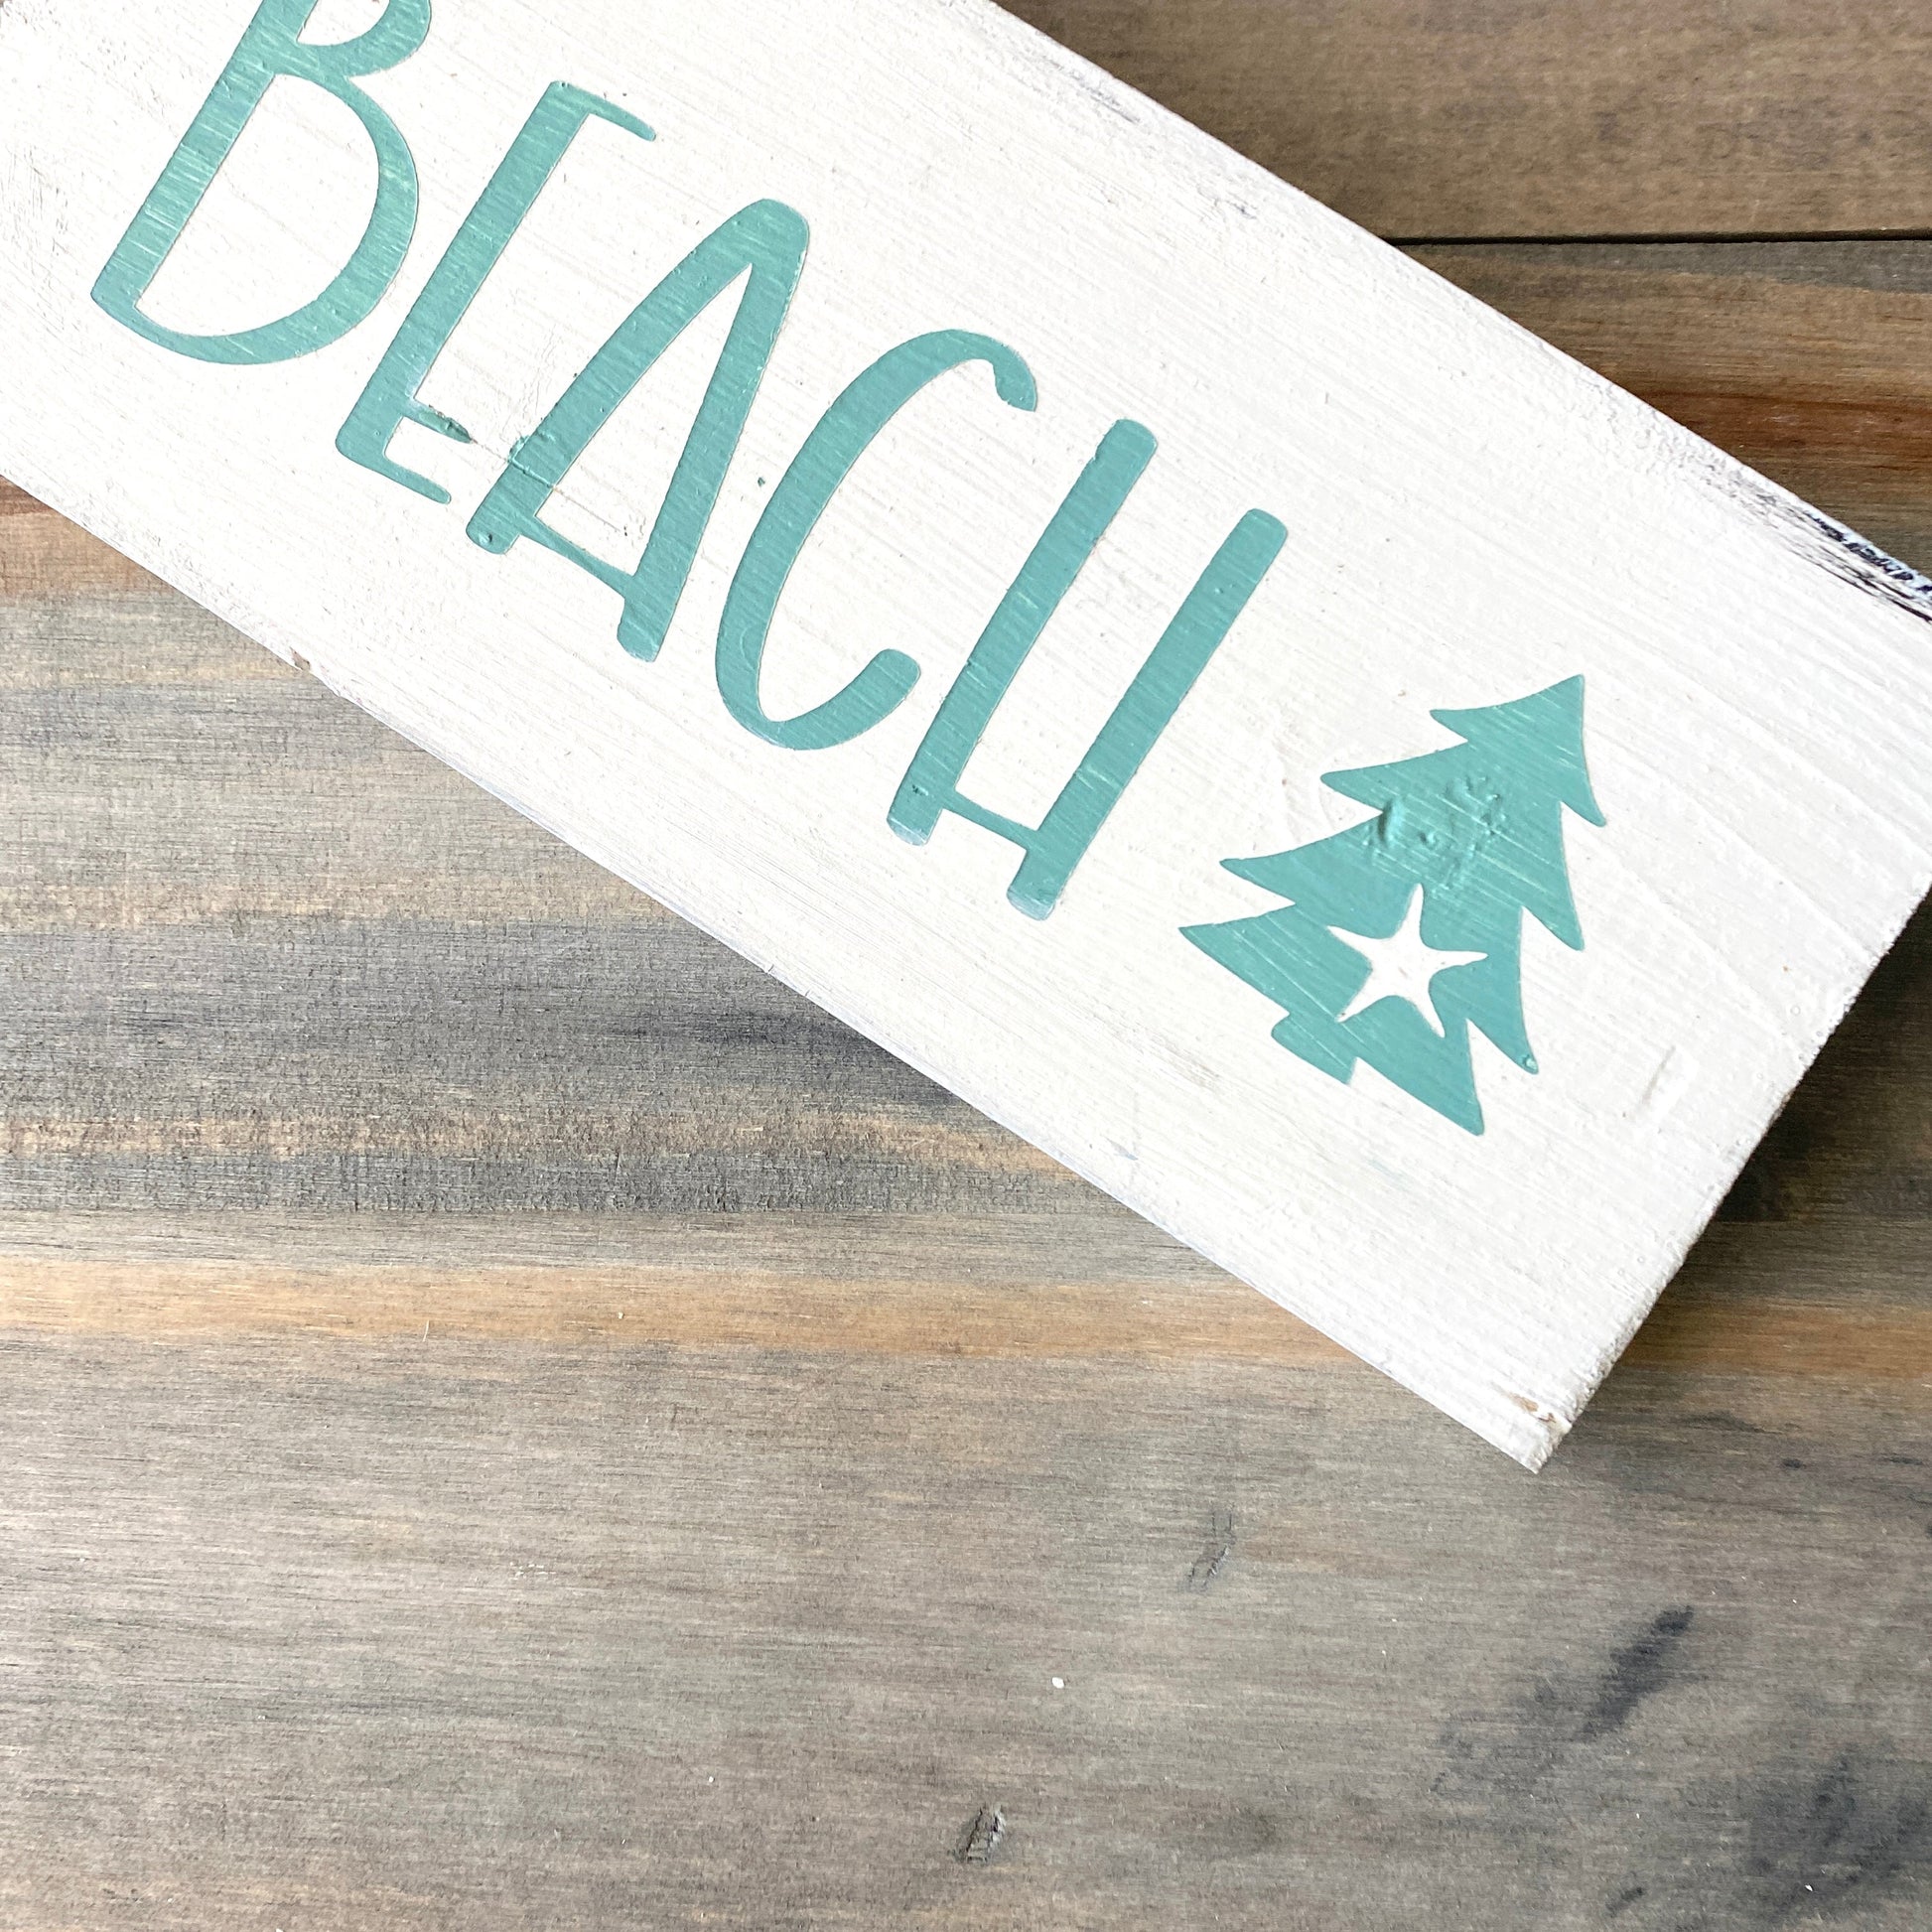 Coastal Christmas Decor, Anchored Soul Designs Beach Christmas wood sign with small tree and starfish white background with aqua design, beach house holiday decor coastal design